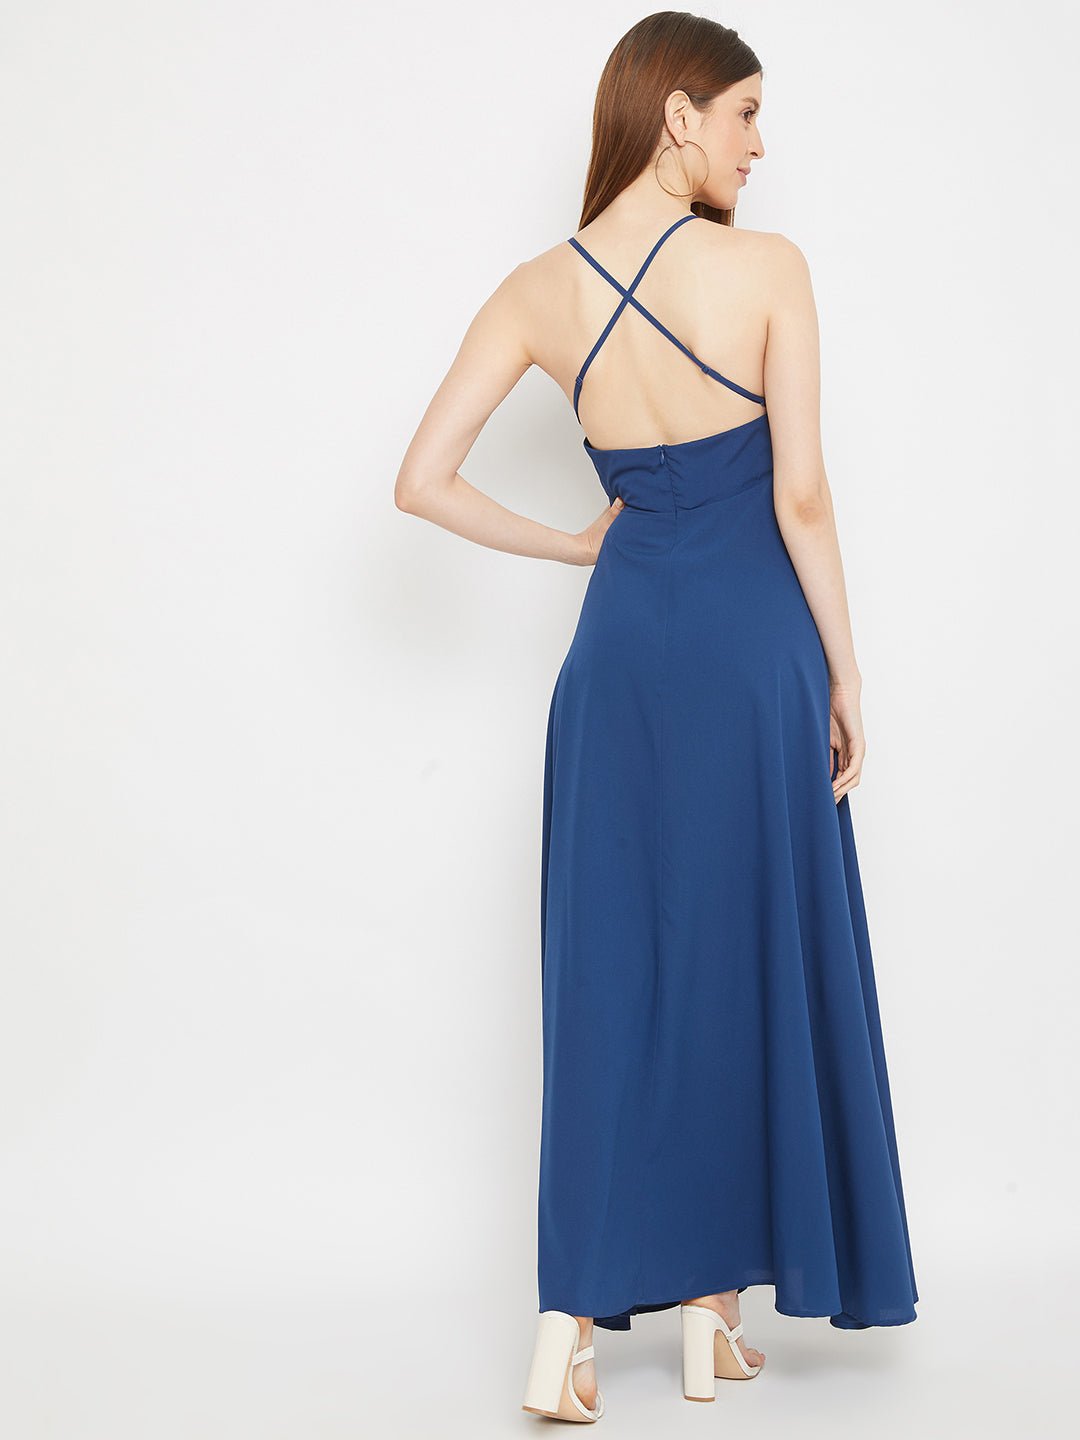 Folk Republic Women Solid Blue Shoulder Straps Backless Maxi Dress - #folk republic#